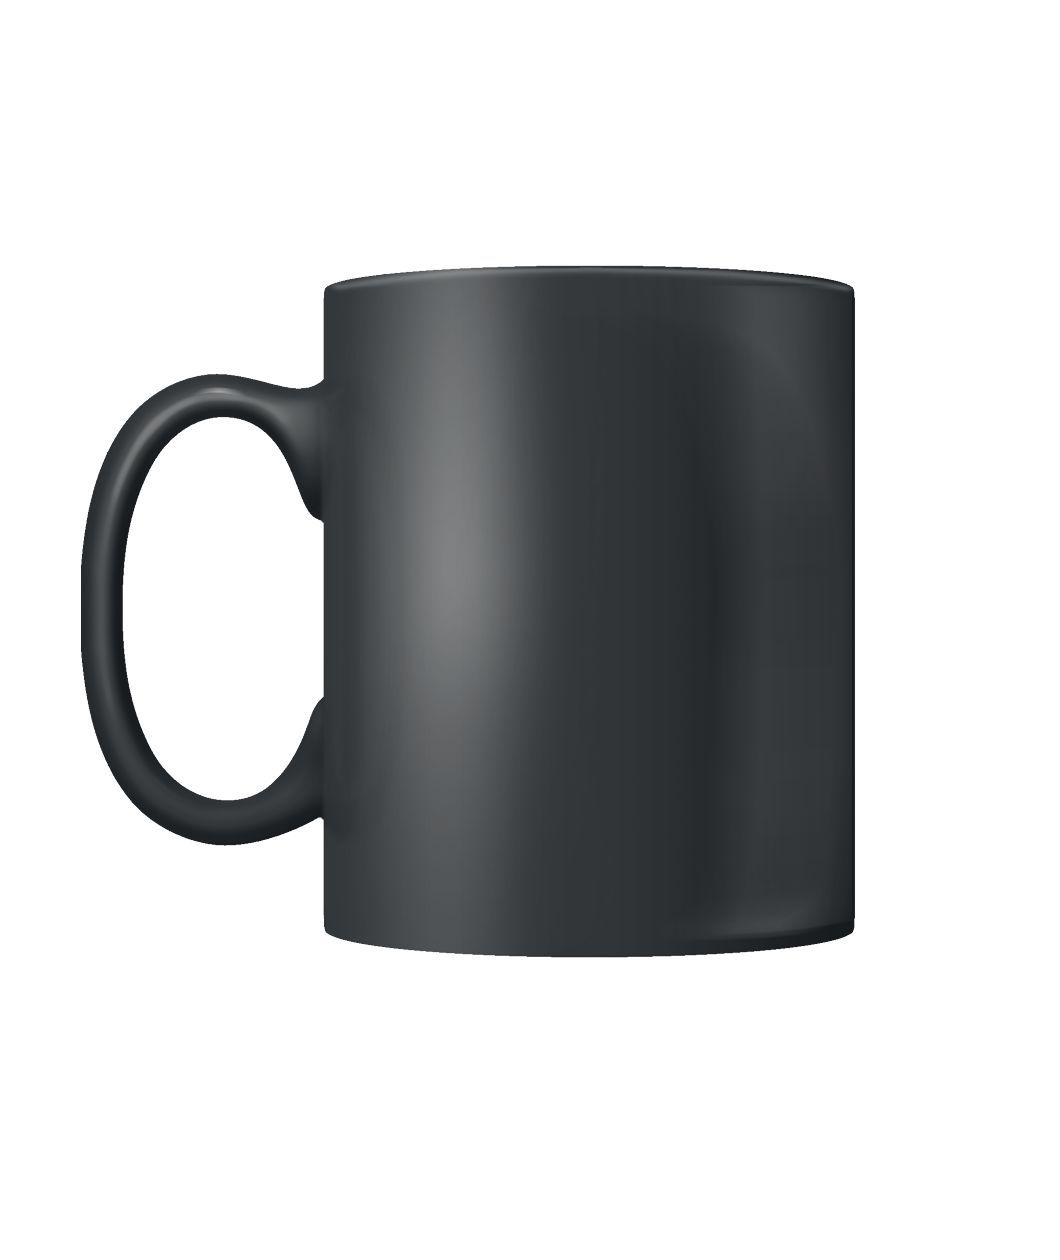 Adventure Time Characters Mug Valentine Gifts Color Coffee Mug